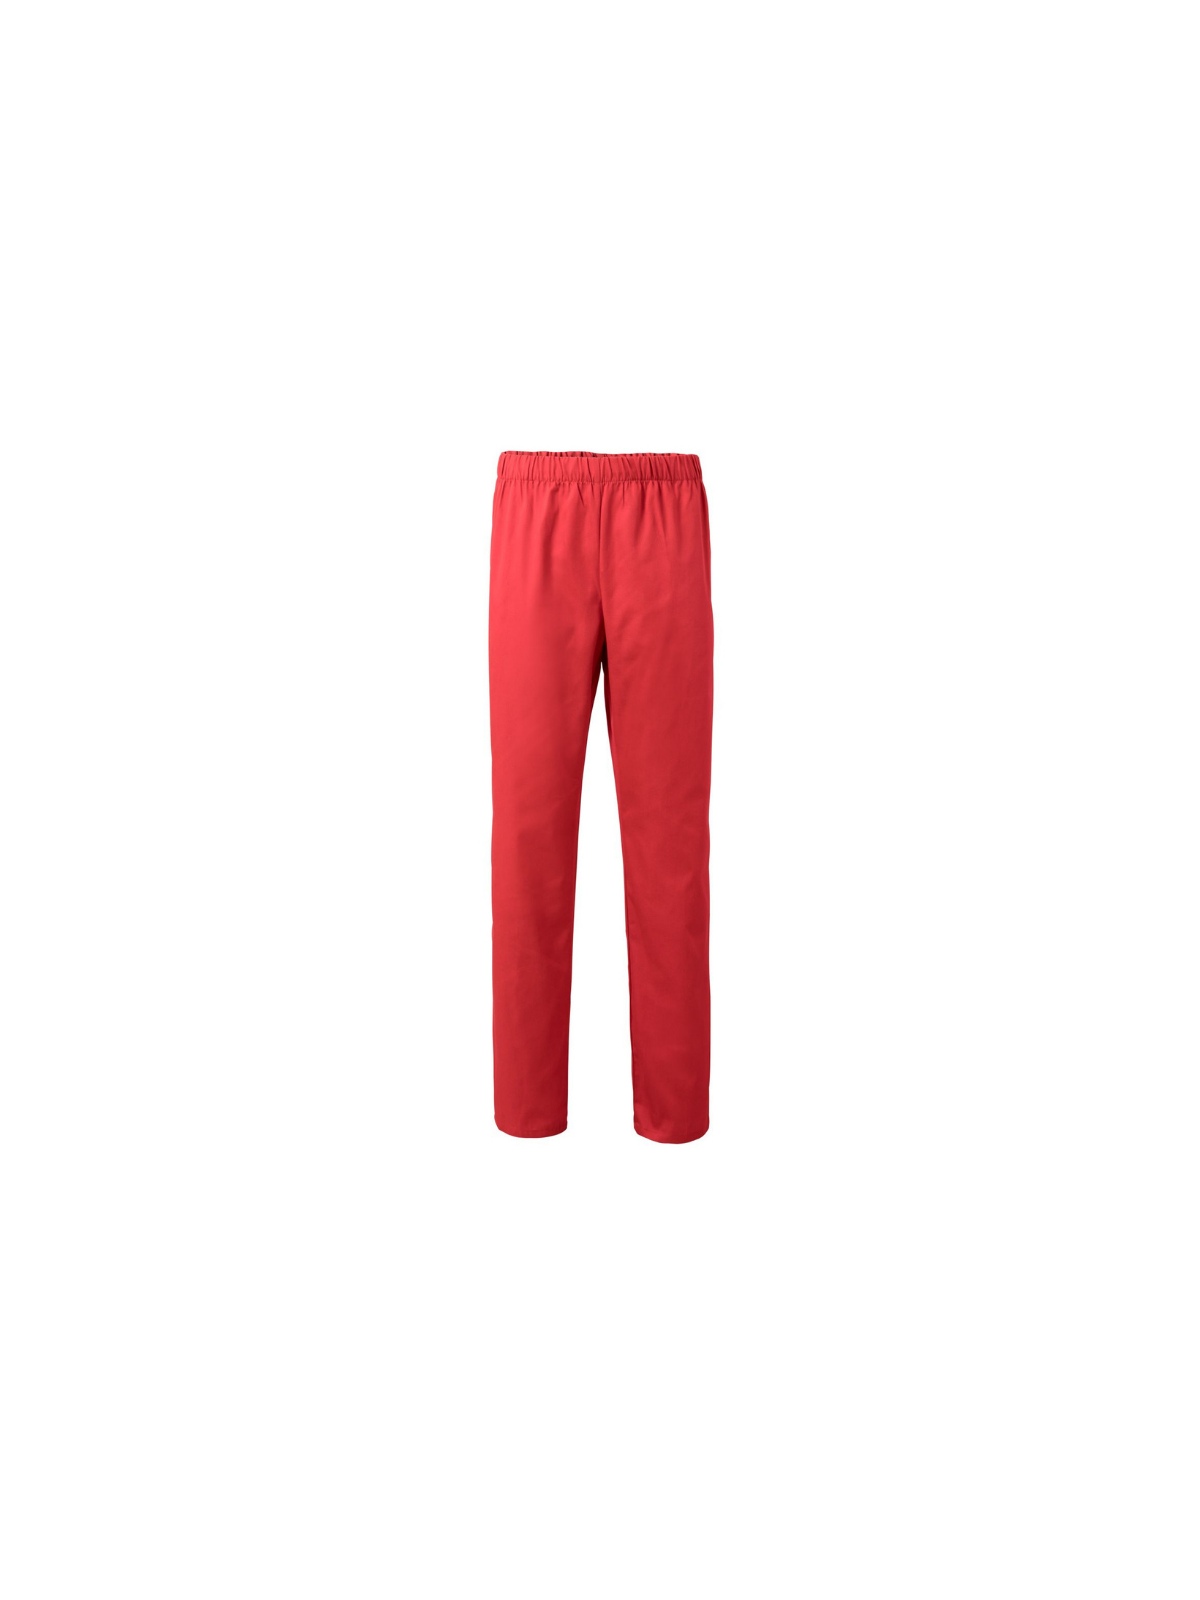 Pantalón uniforme sanitario Velilla rojo coral